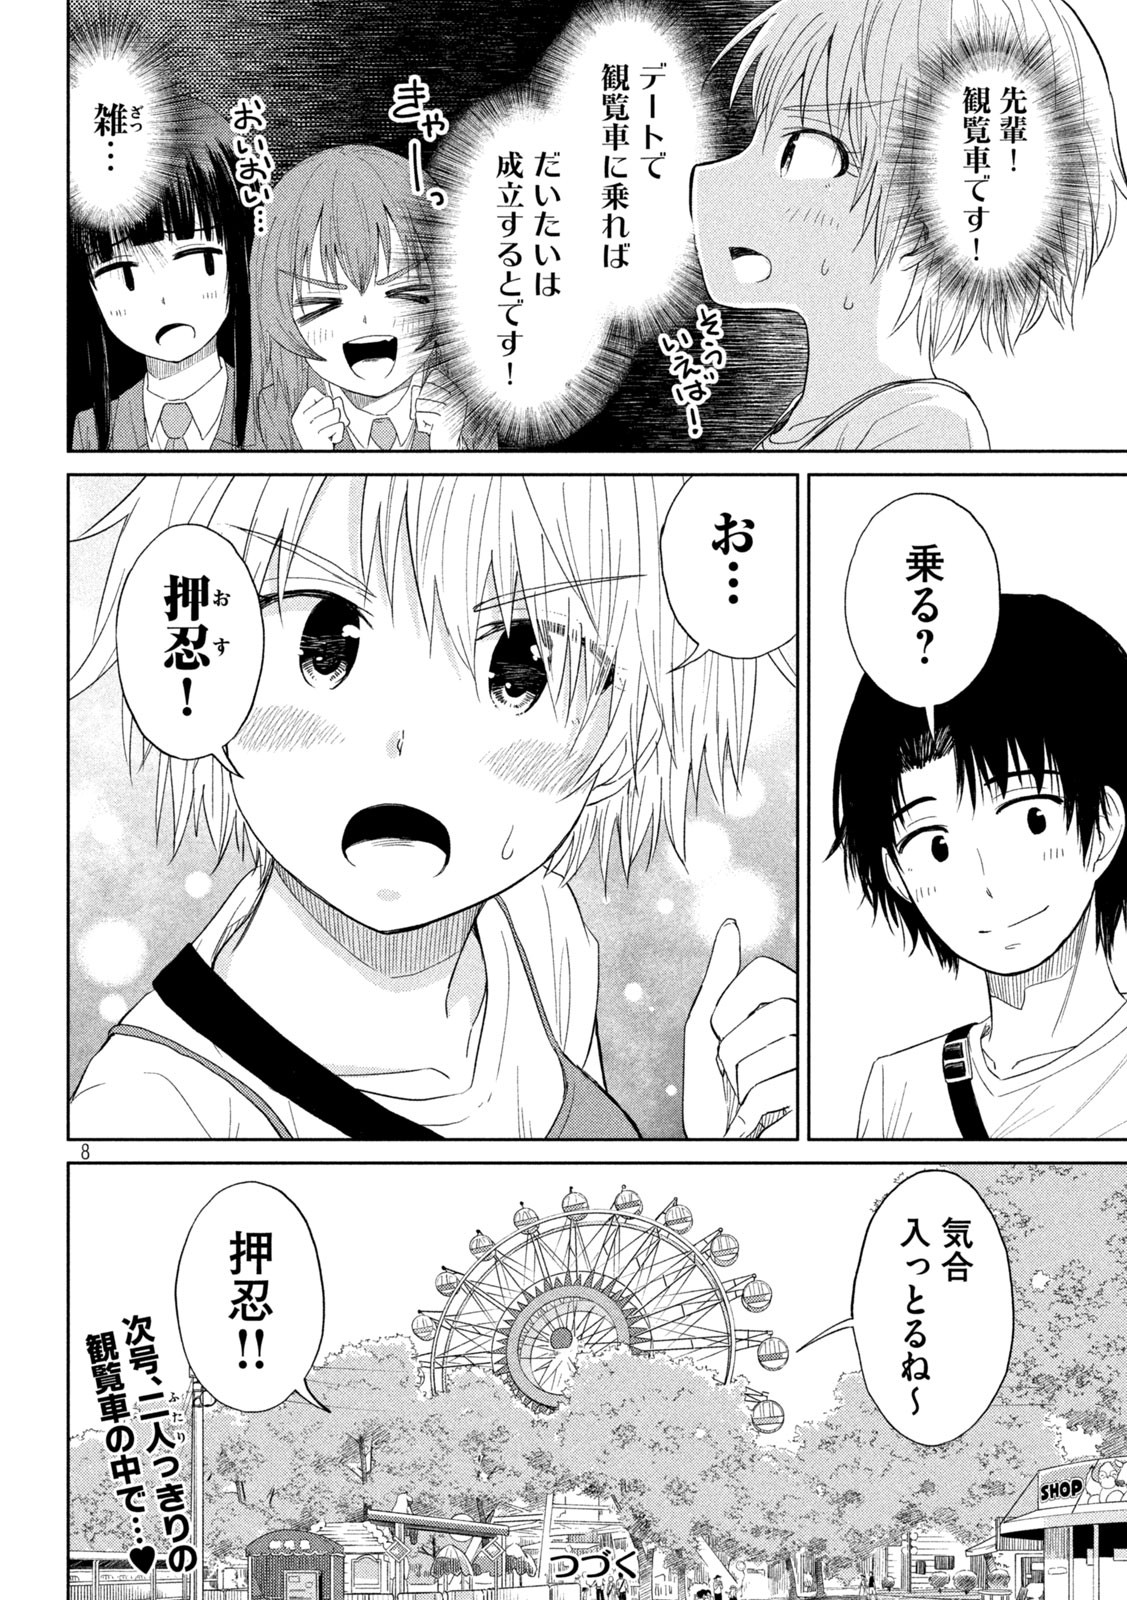 Koharu haru! - Chapter 103 - Page 4